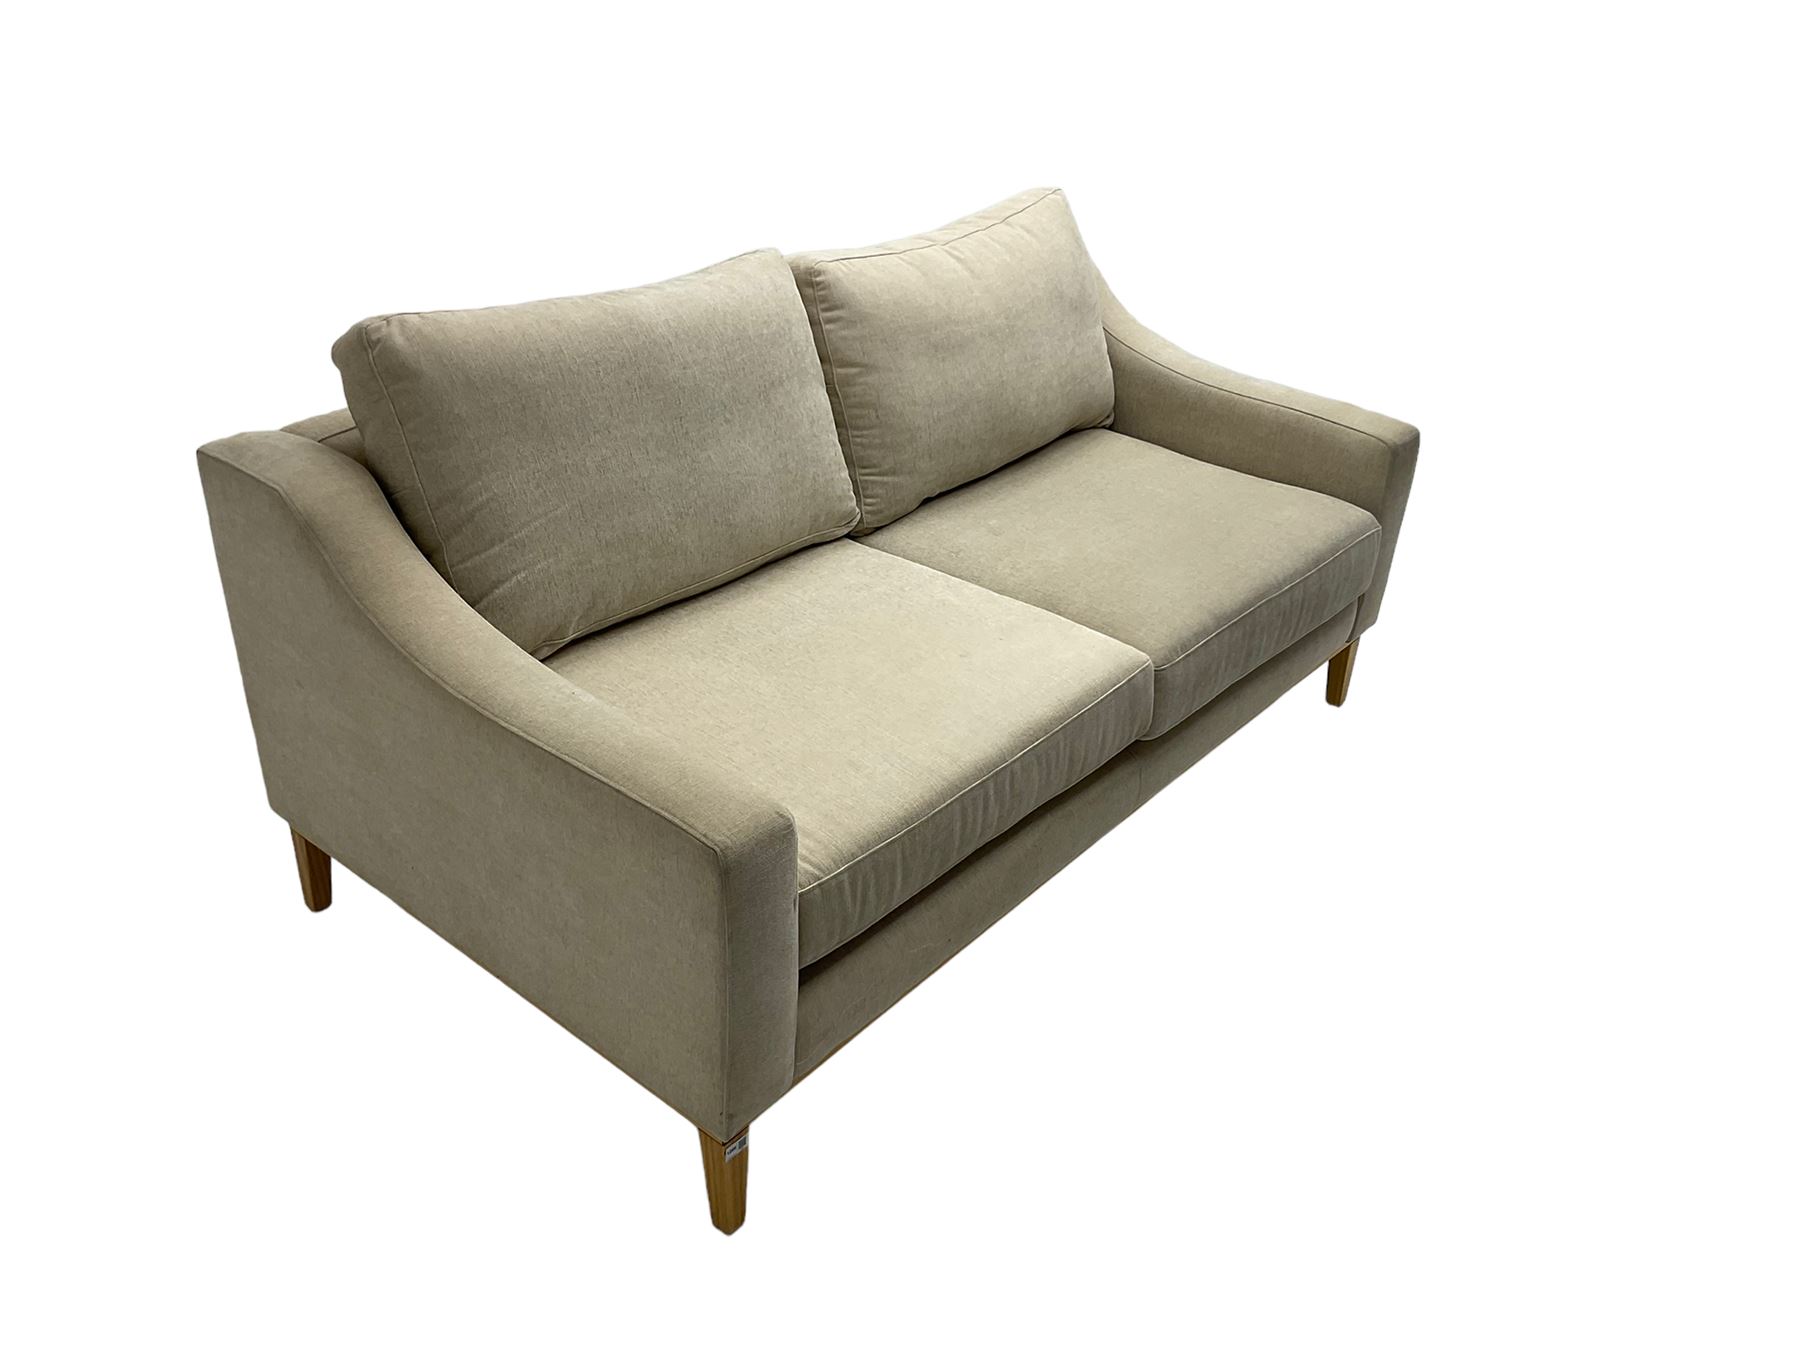 Noble & Jones - three seat sofa - Image 10 of 13